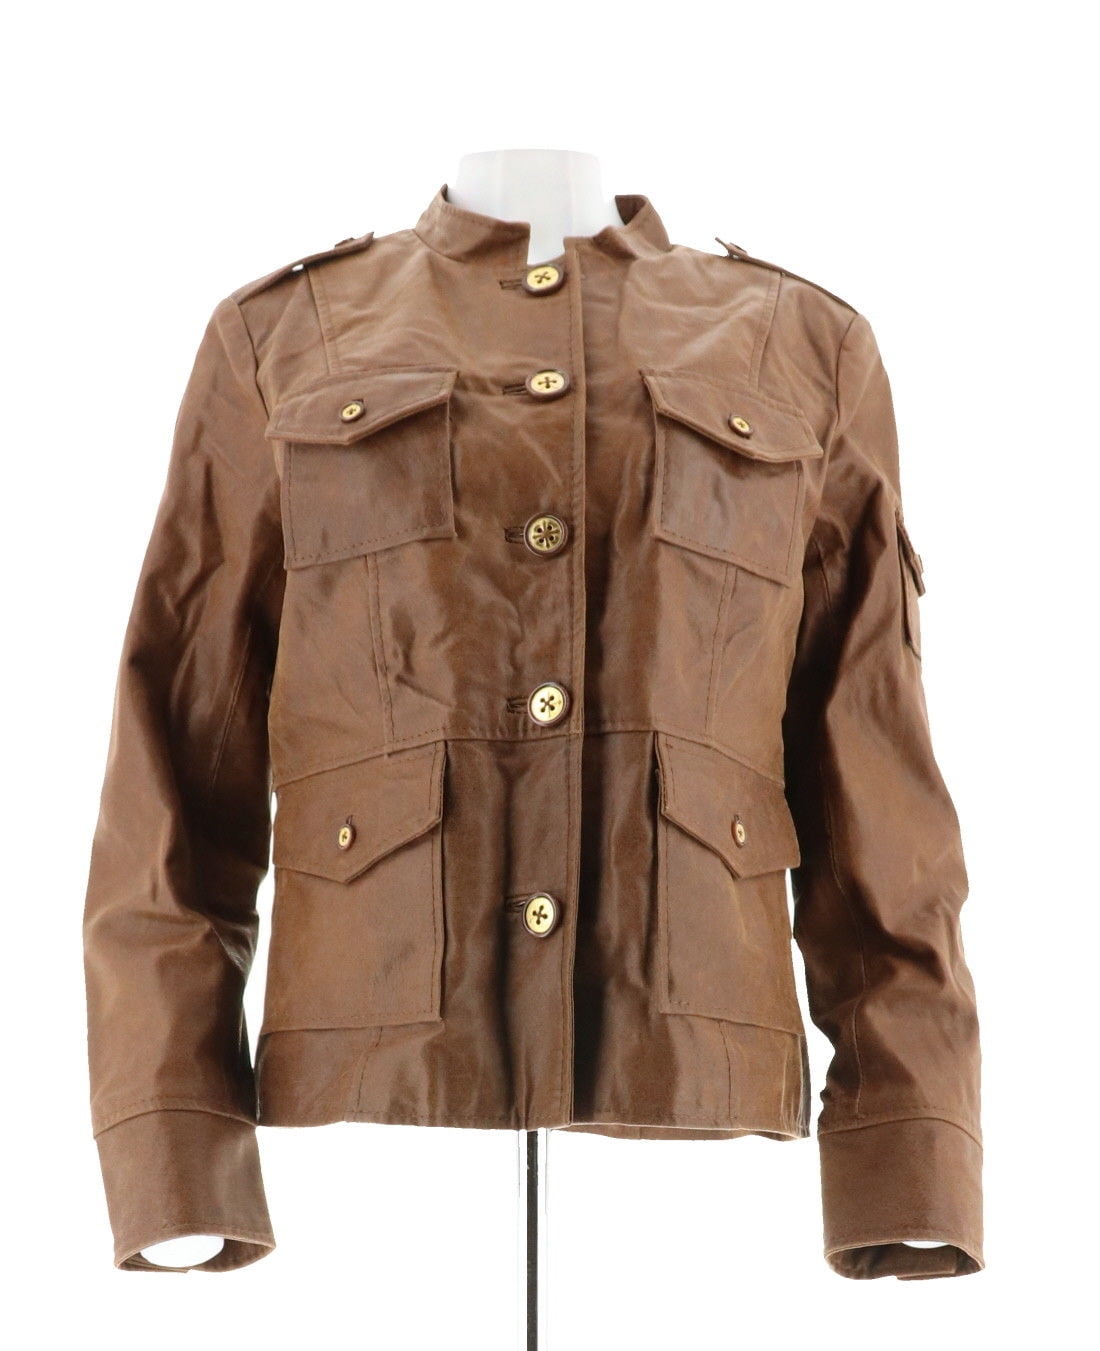 GILI Distressed Leather Lined Jacket Front Pockets A235274 - Walmart.com